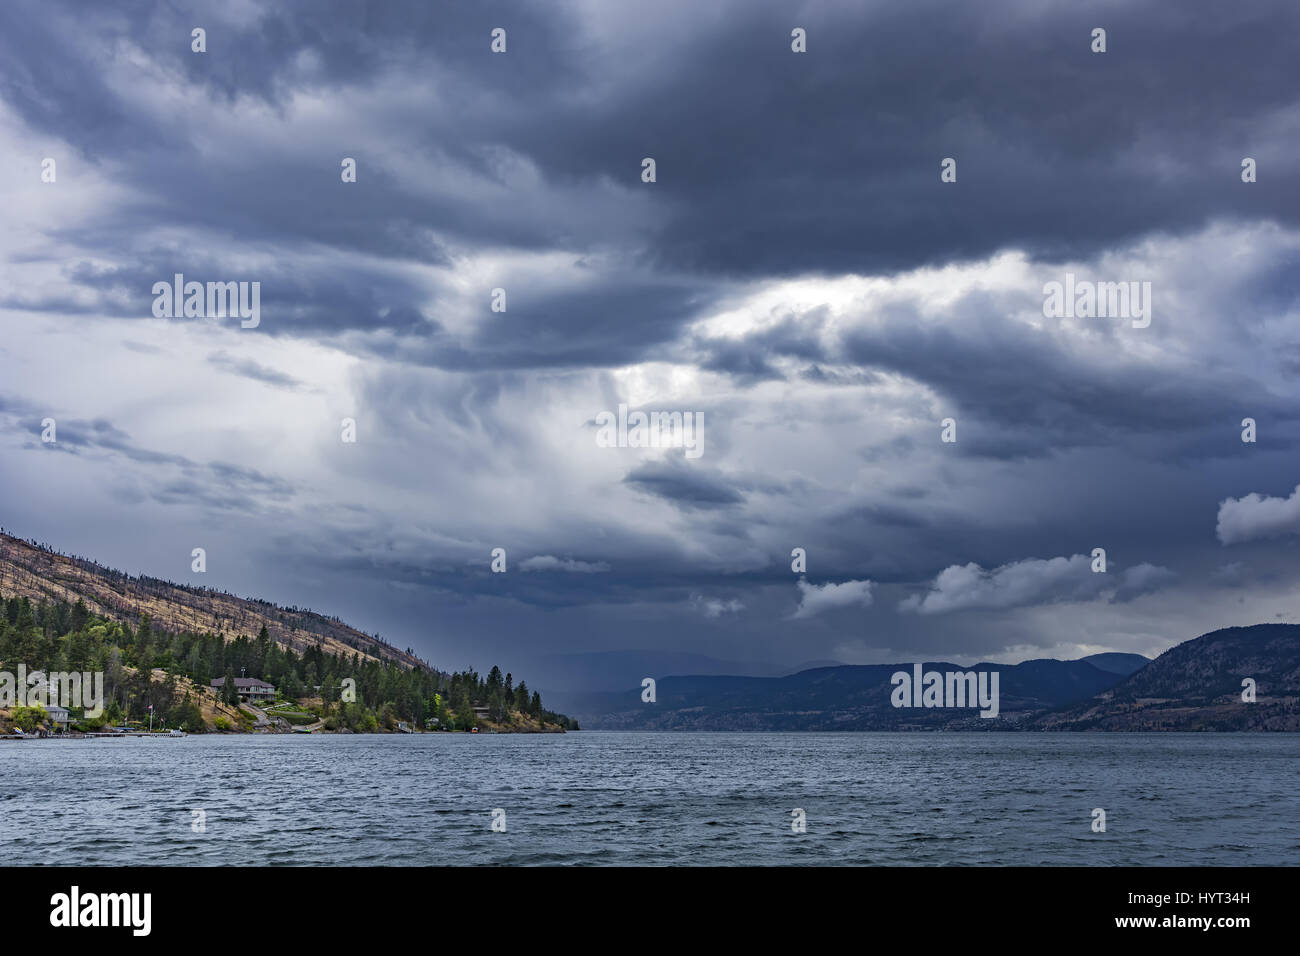 Okanagan Lake near Kelowna British Columbia Canada on a stormy day Stock Photo